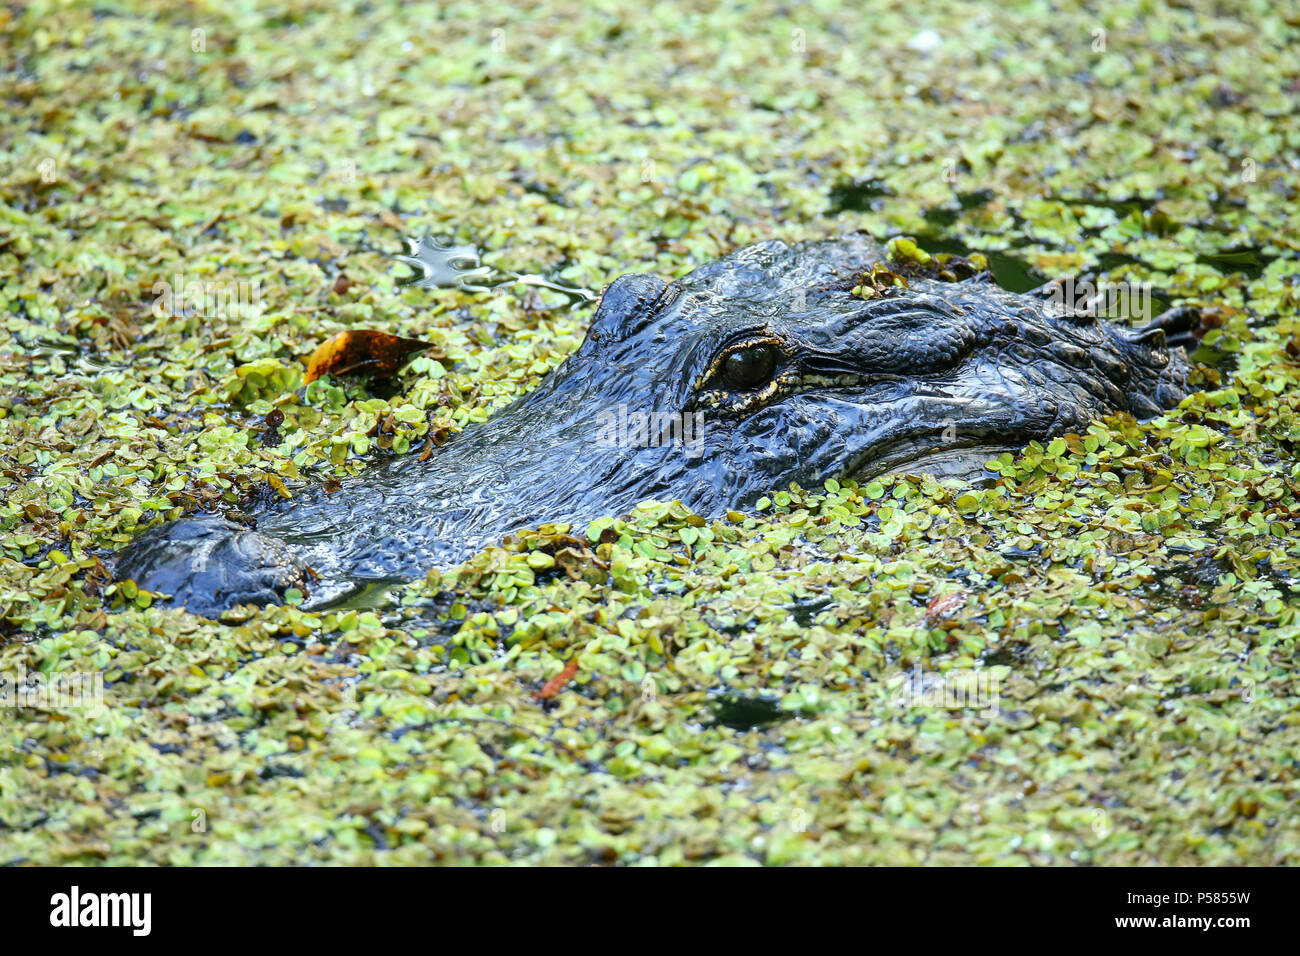 Portrait of Alligator (Alligator mississippiensis) floating in a swamp Stock Photo